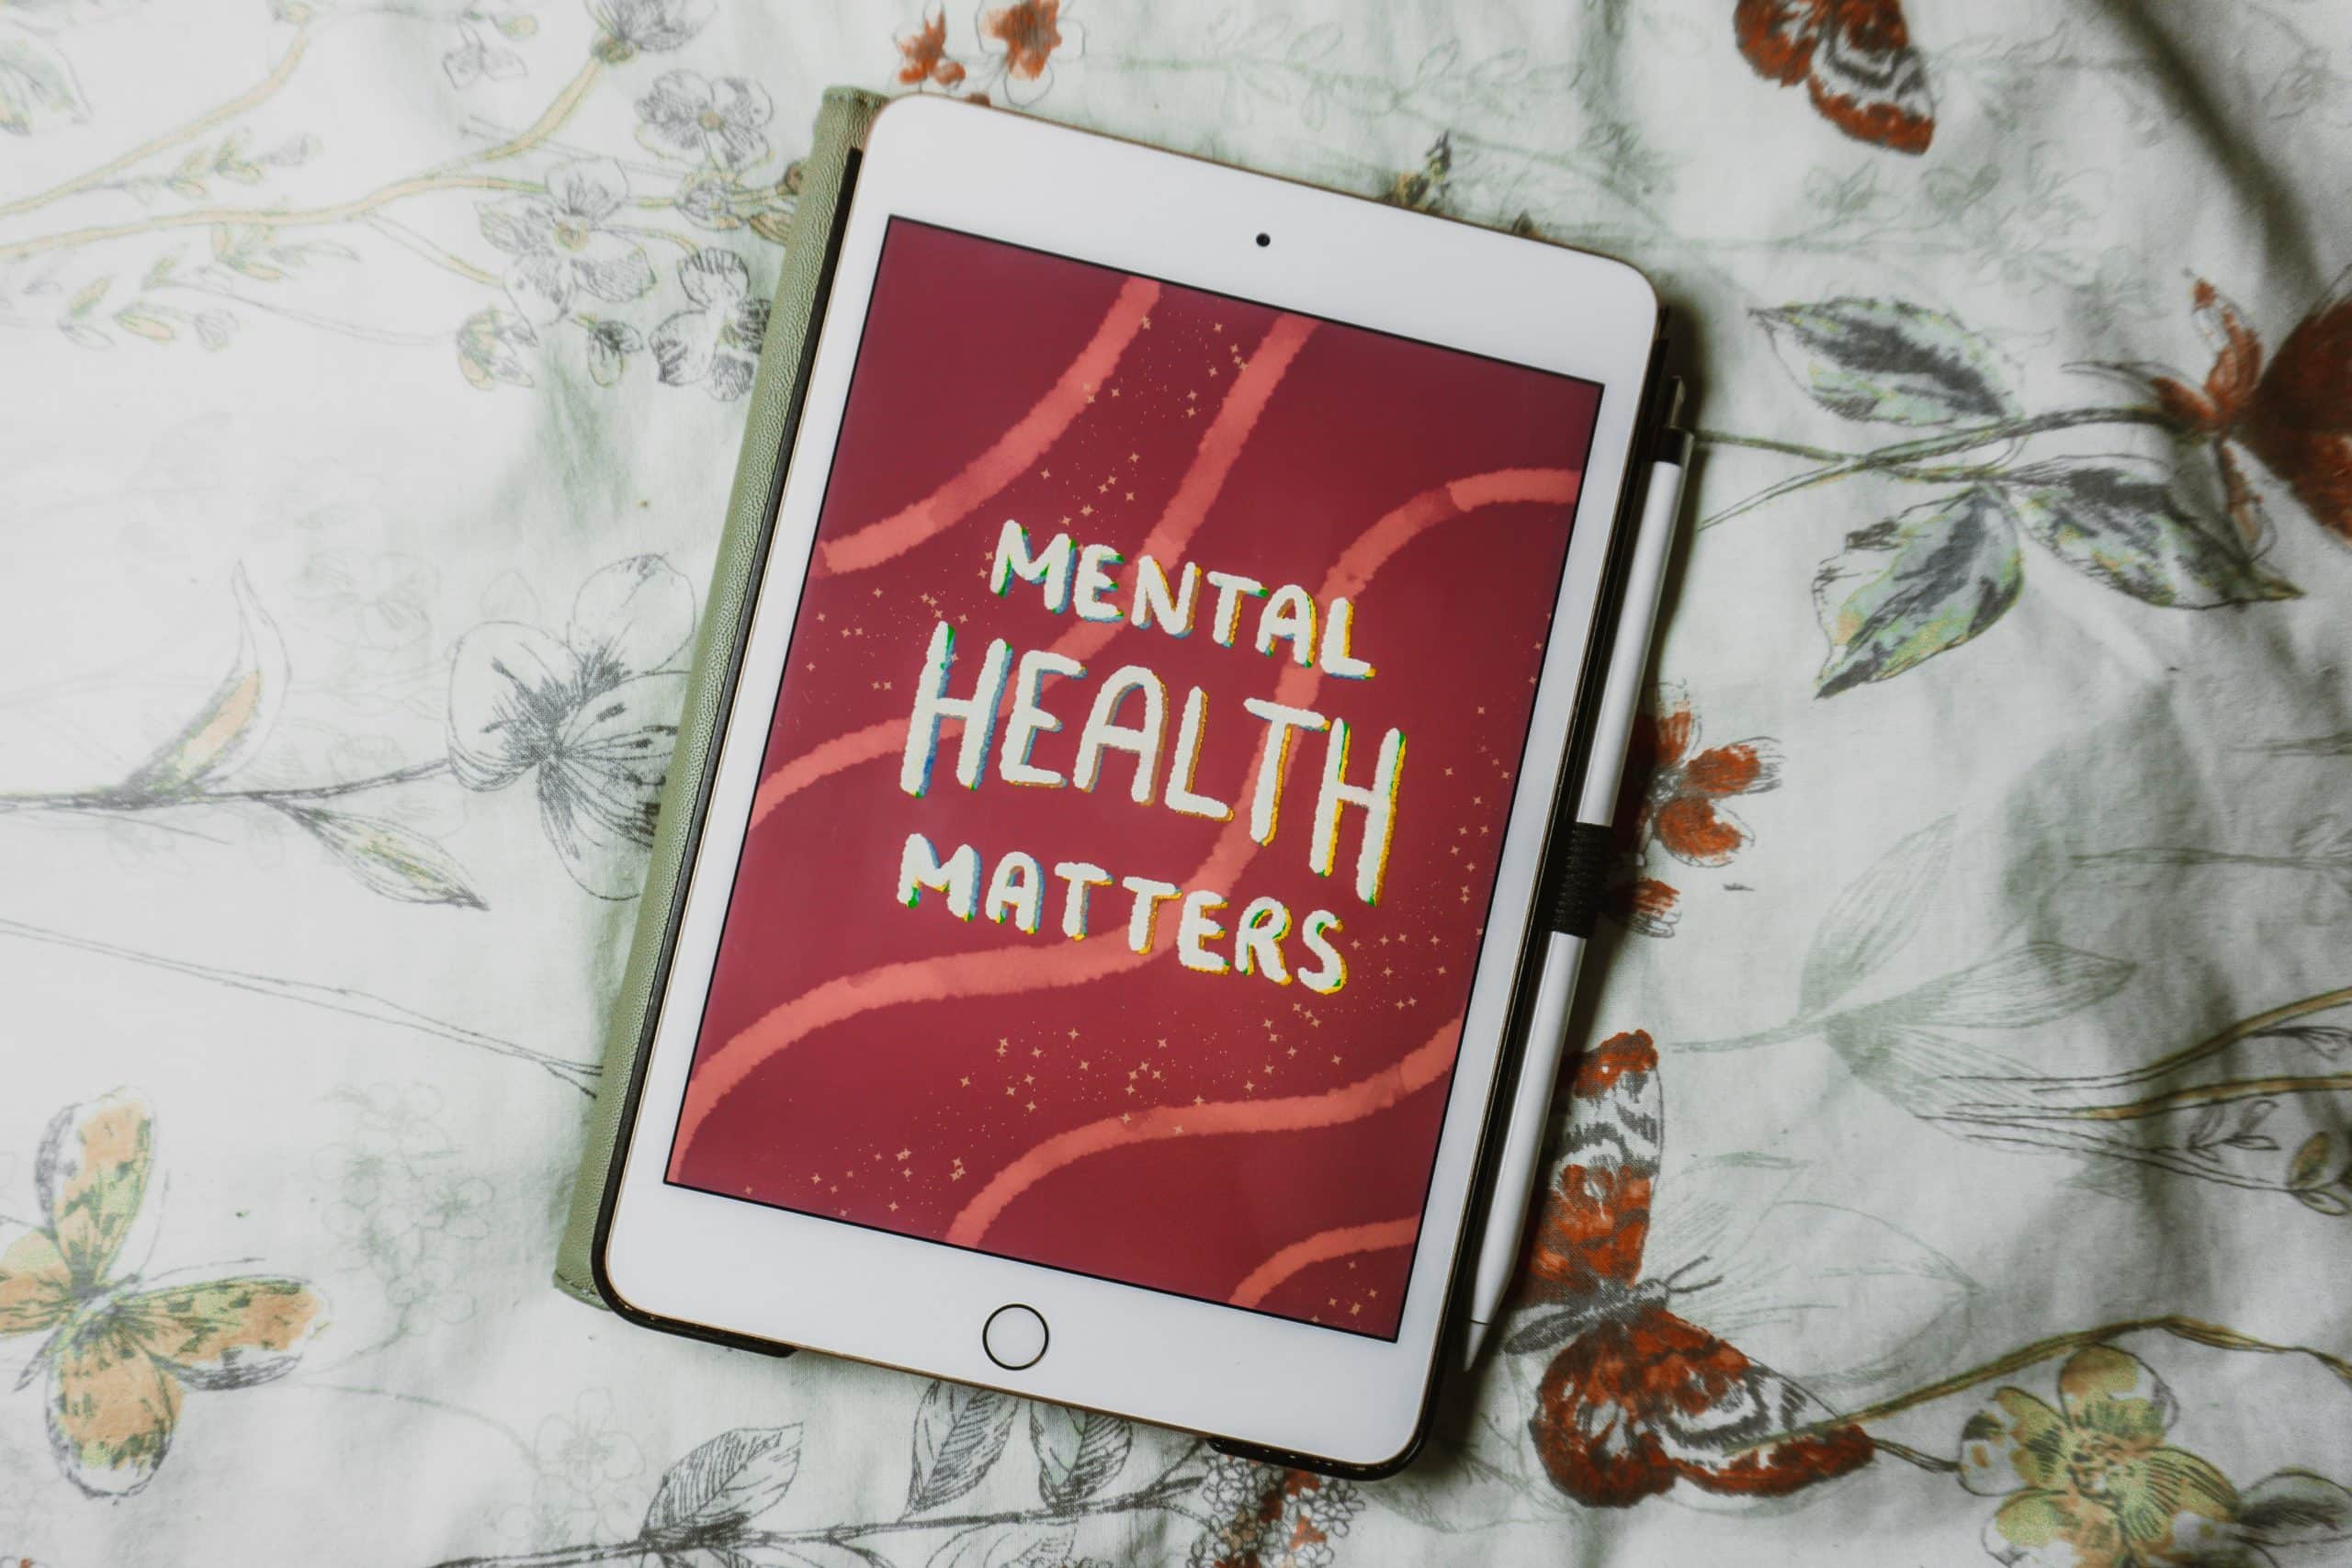 mental health matters message